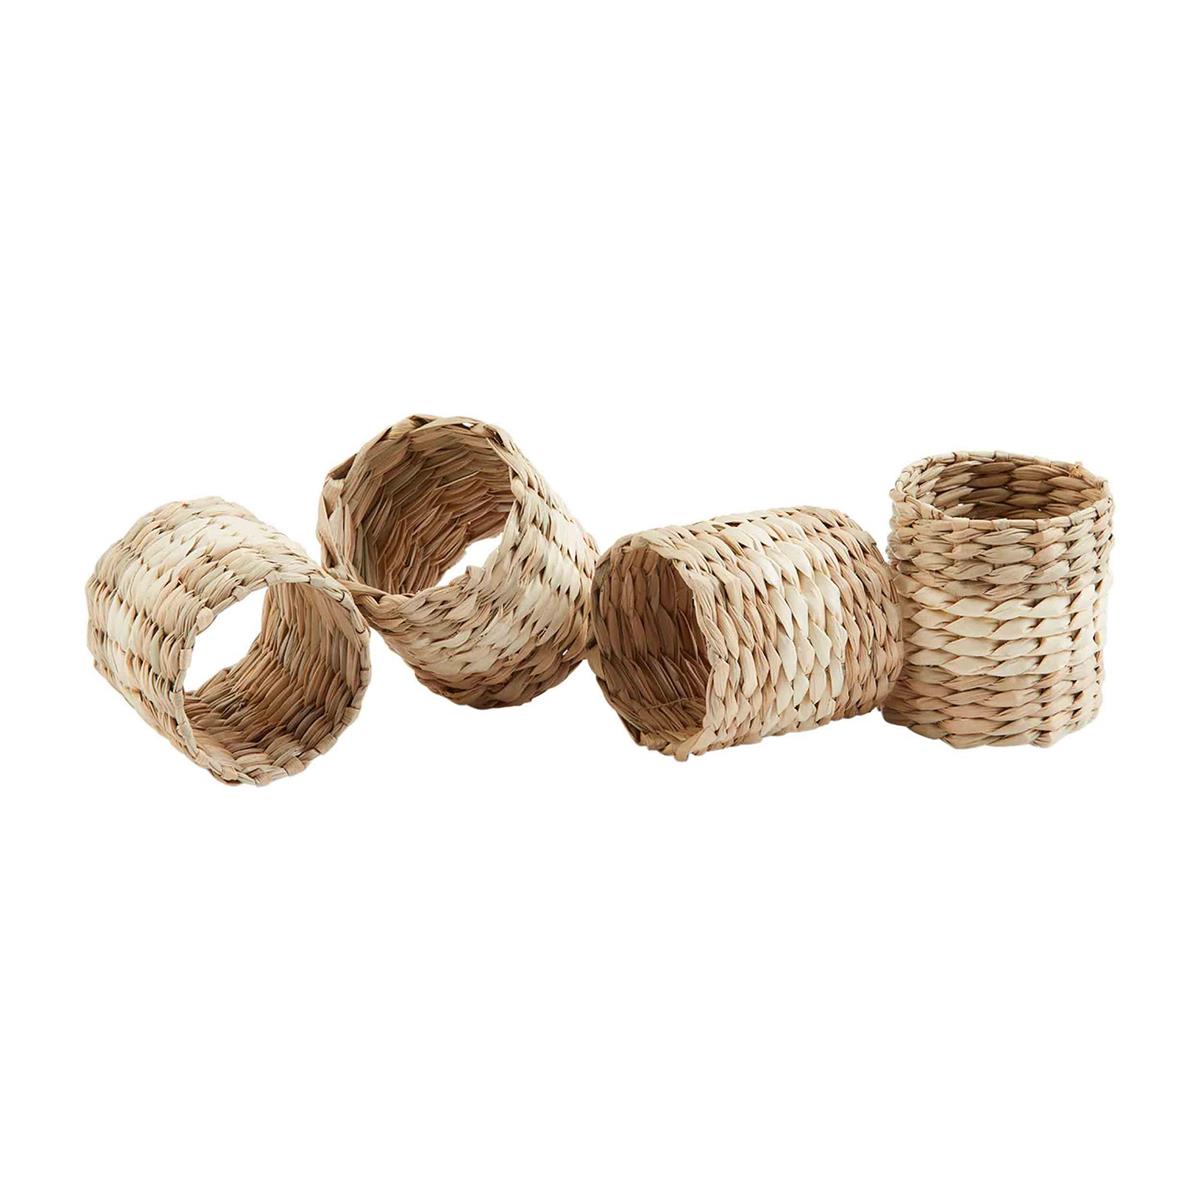 Seagrass Napkin Rings